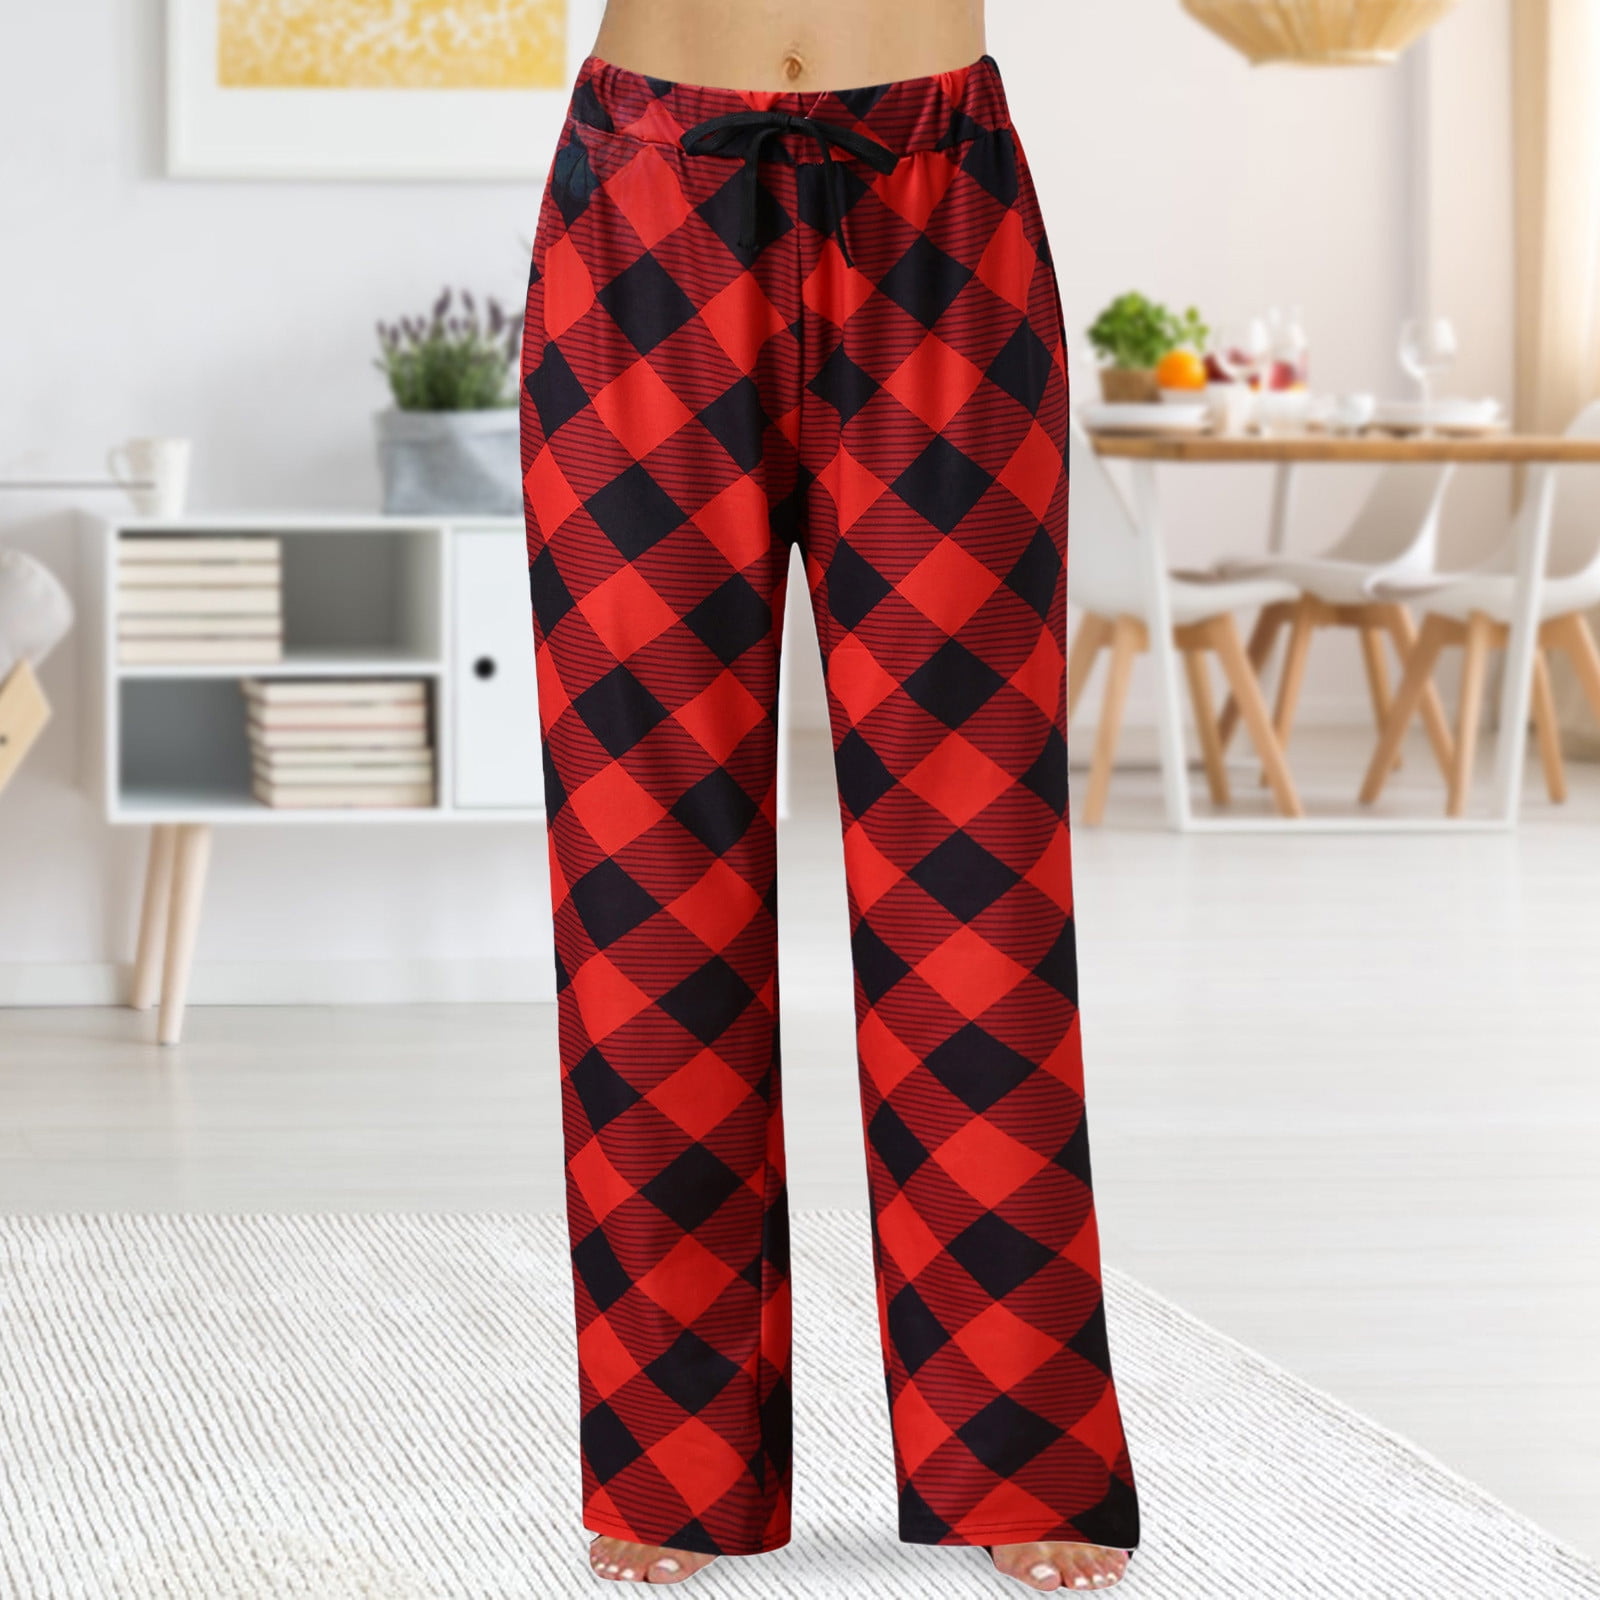 Hvyesh Women Lounge Pants Comfy Pajama Bottom with Pockets Stretch Plaid  Sleepwear Drawstring Pj Bottoms Pants 